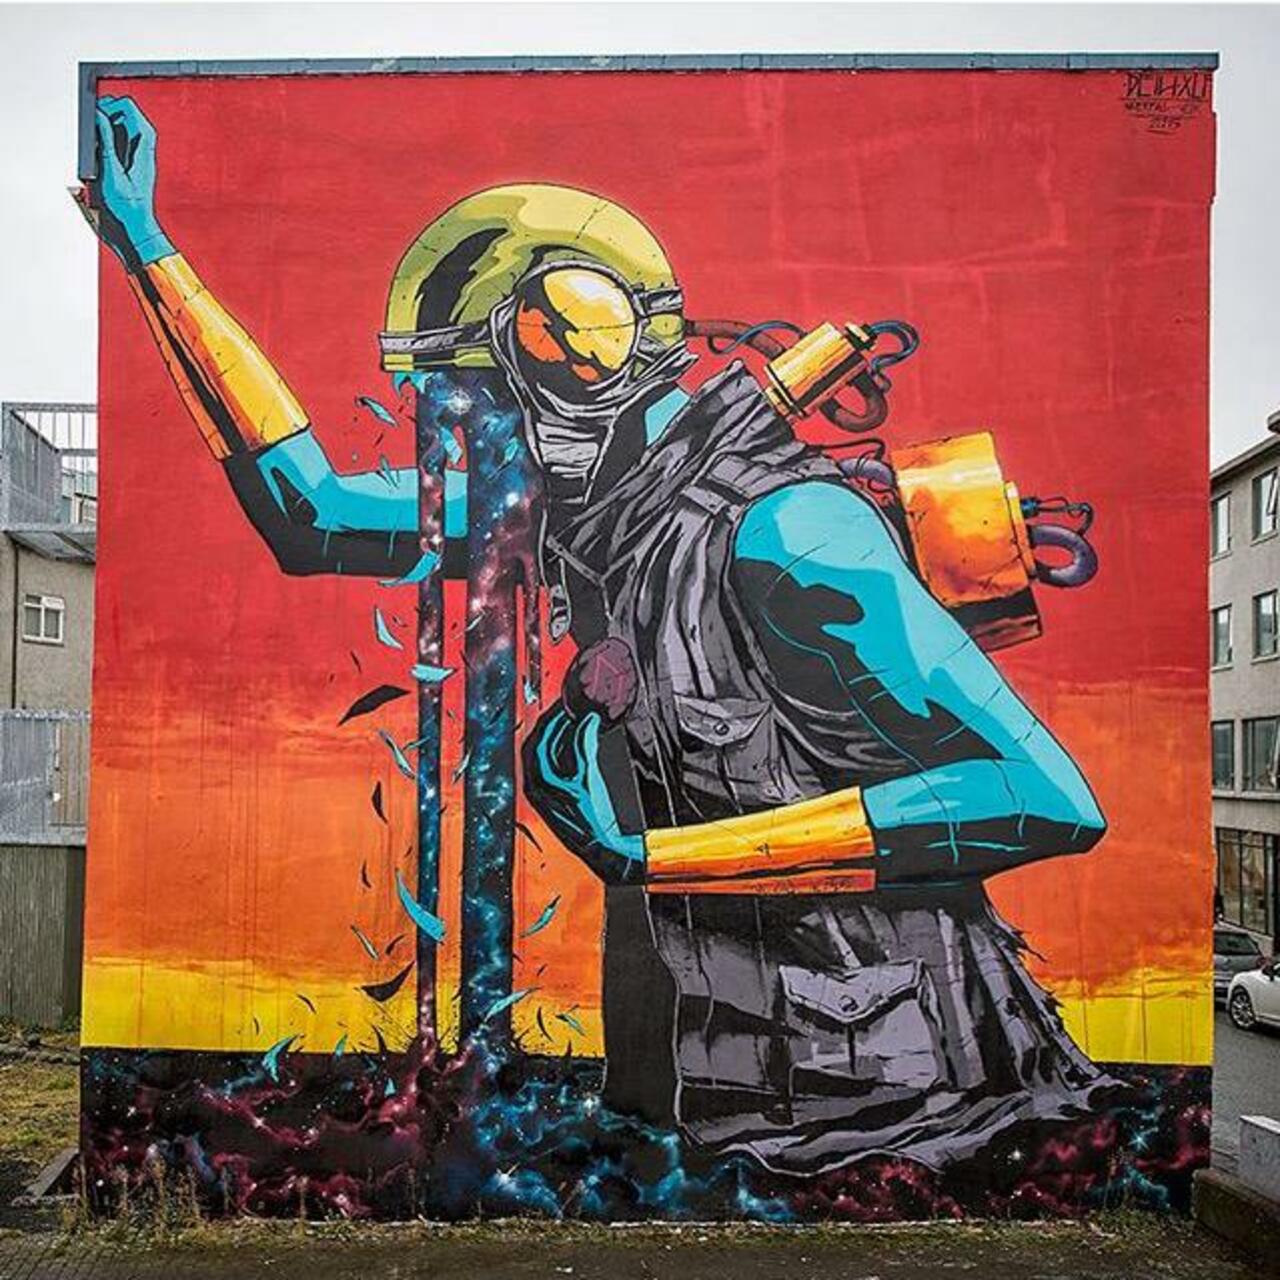 RT belilac "Street Art by Deih in Reykjavik 

#art #graffiti #mural #streetart https://t.co/FuDS40qc0T"